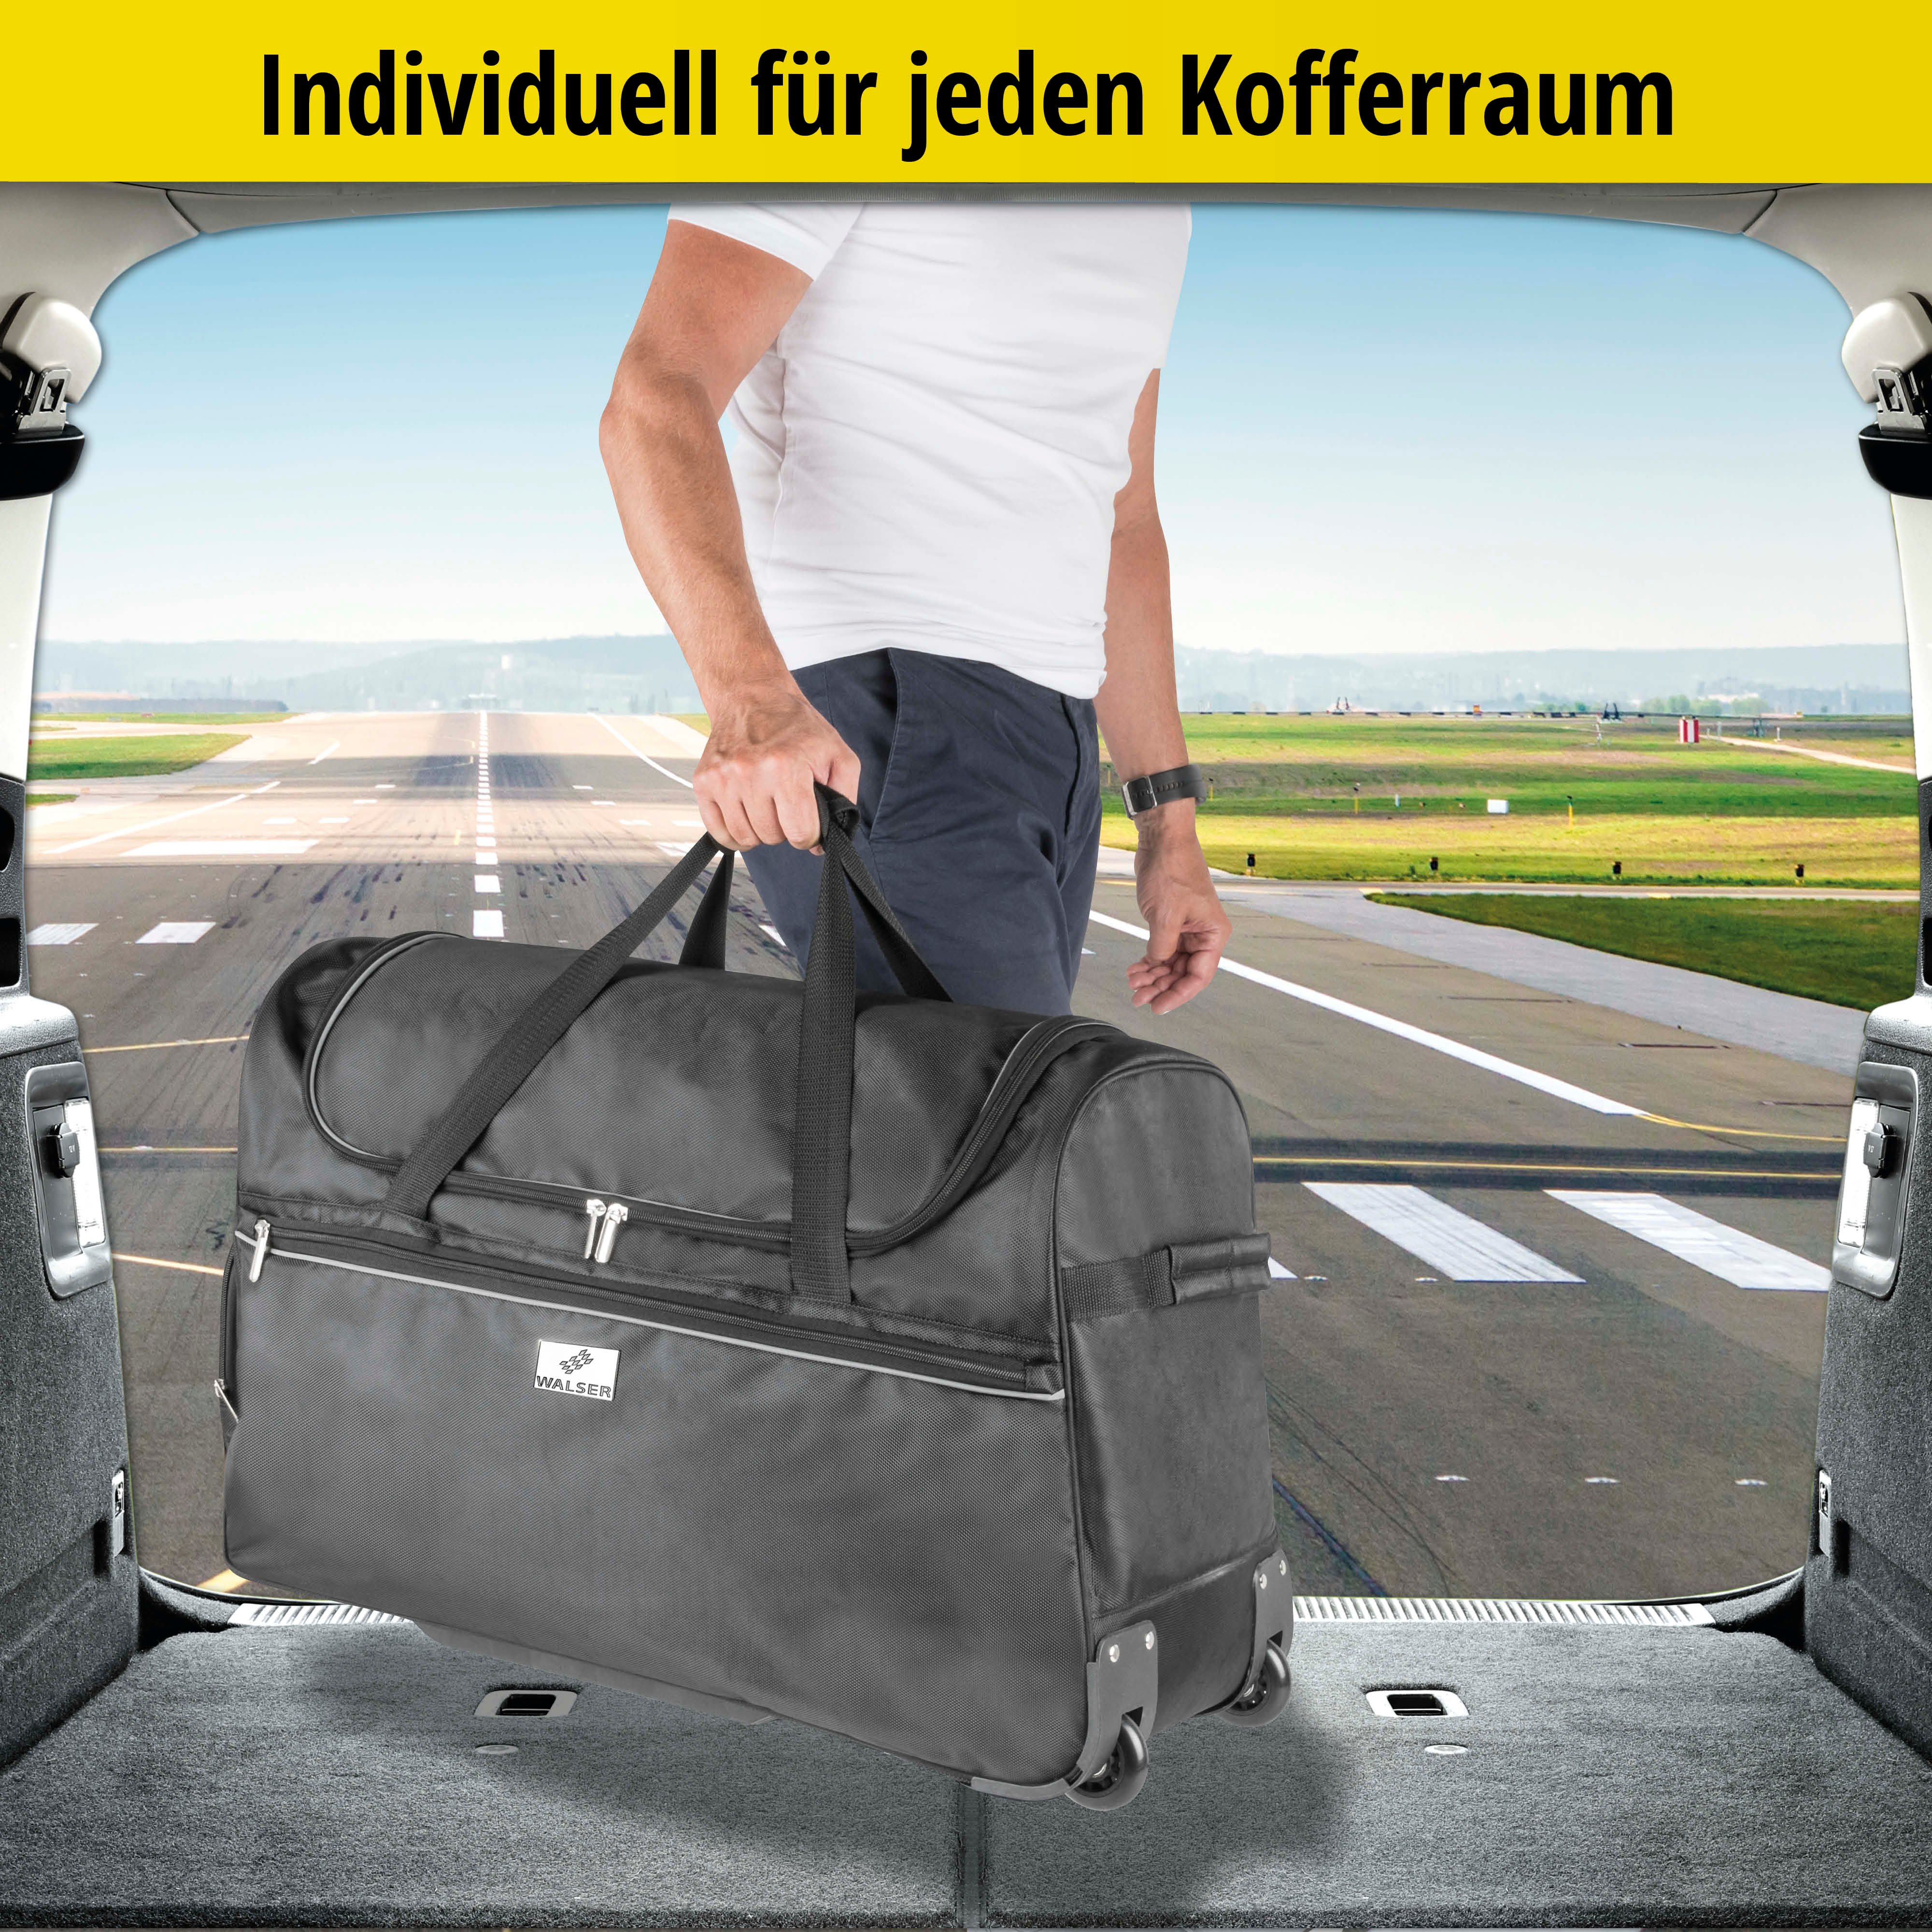 Carbags Trolley Bag, Reisetasche, Reisetrolley 85L - 60x30x40 cm